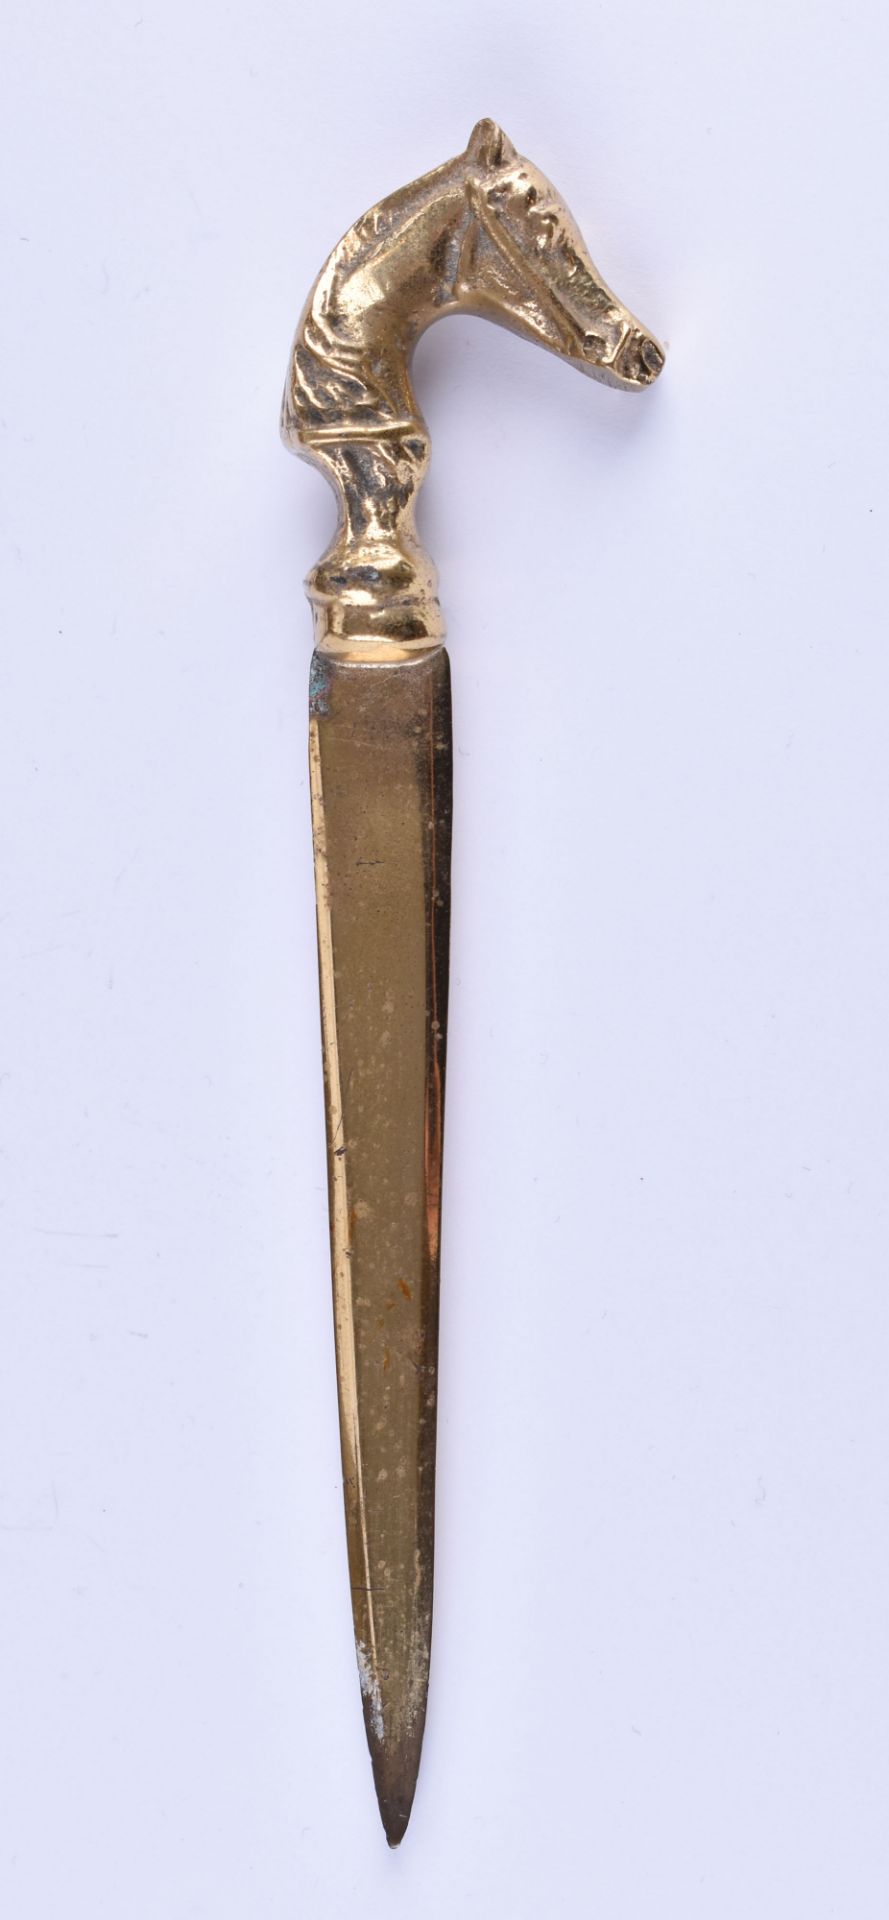  Historicism writing utensils 19th century - Image 3 of 6